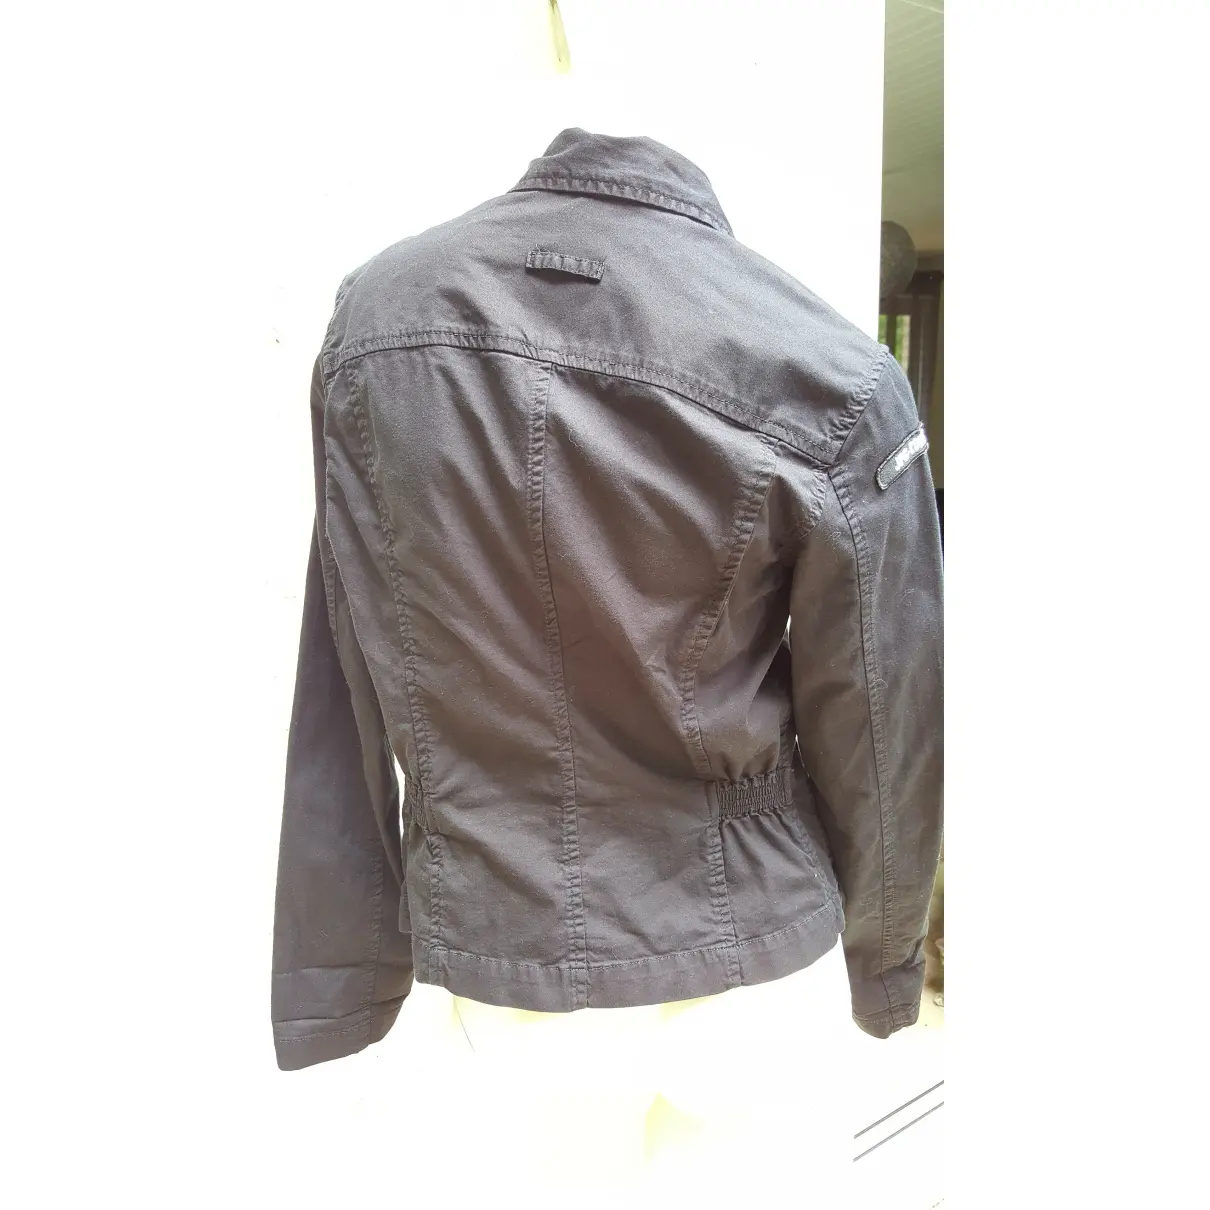 Buy Jean Paul Gaultier Jacket online - Vintage